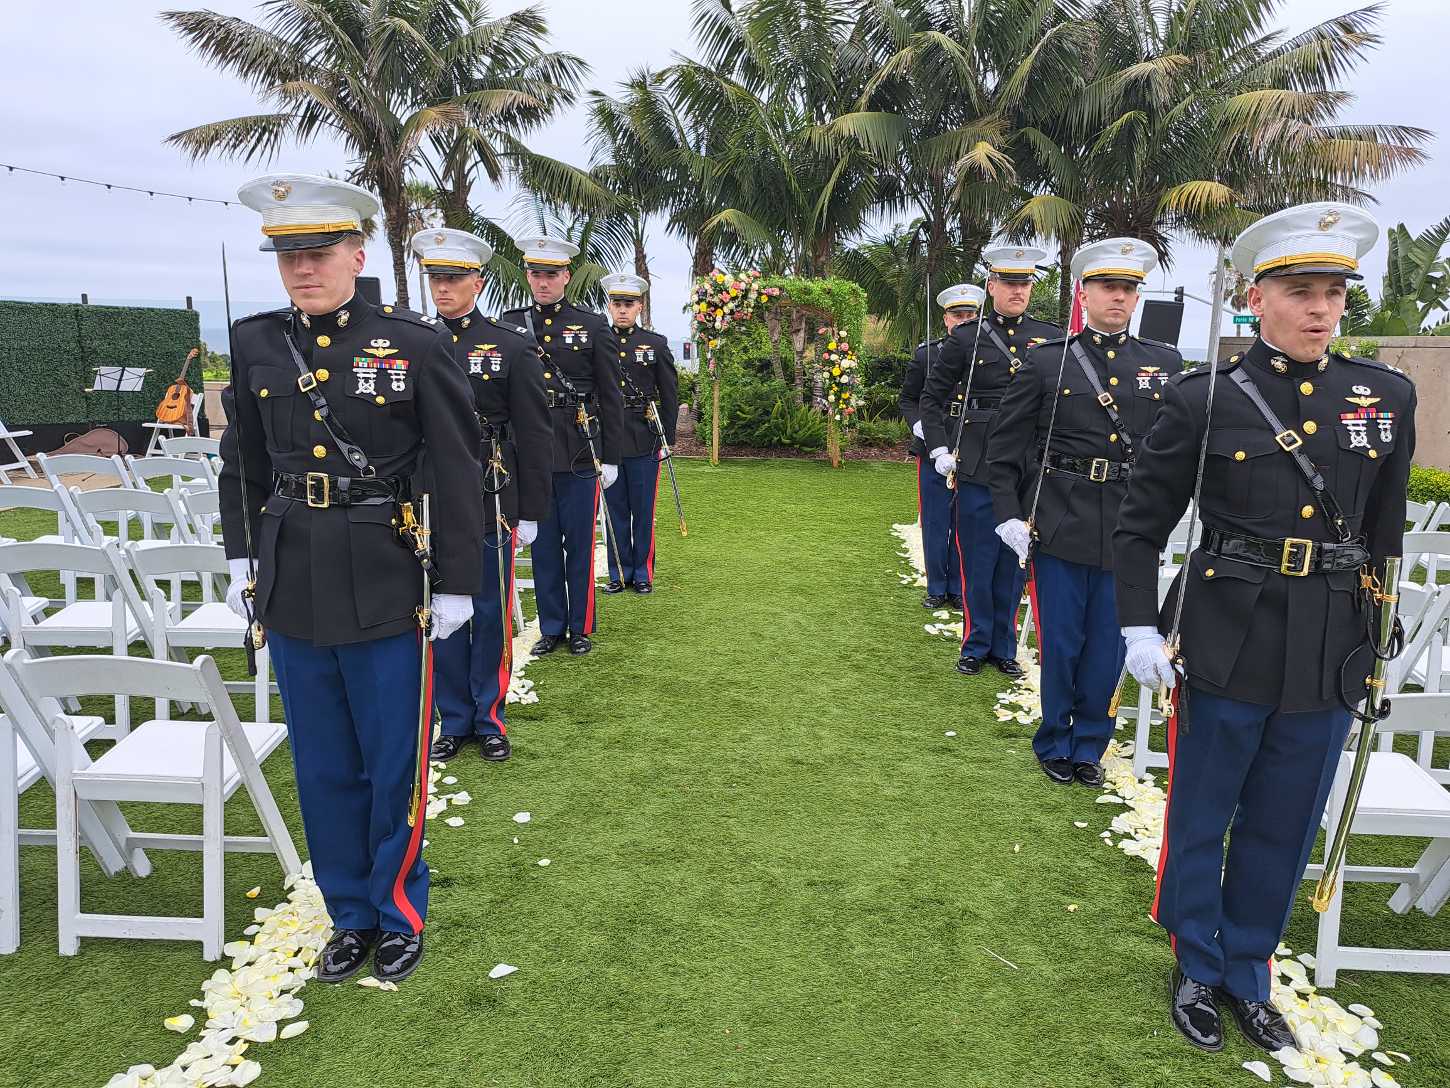 Marines at a military wedding